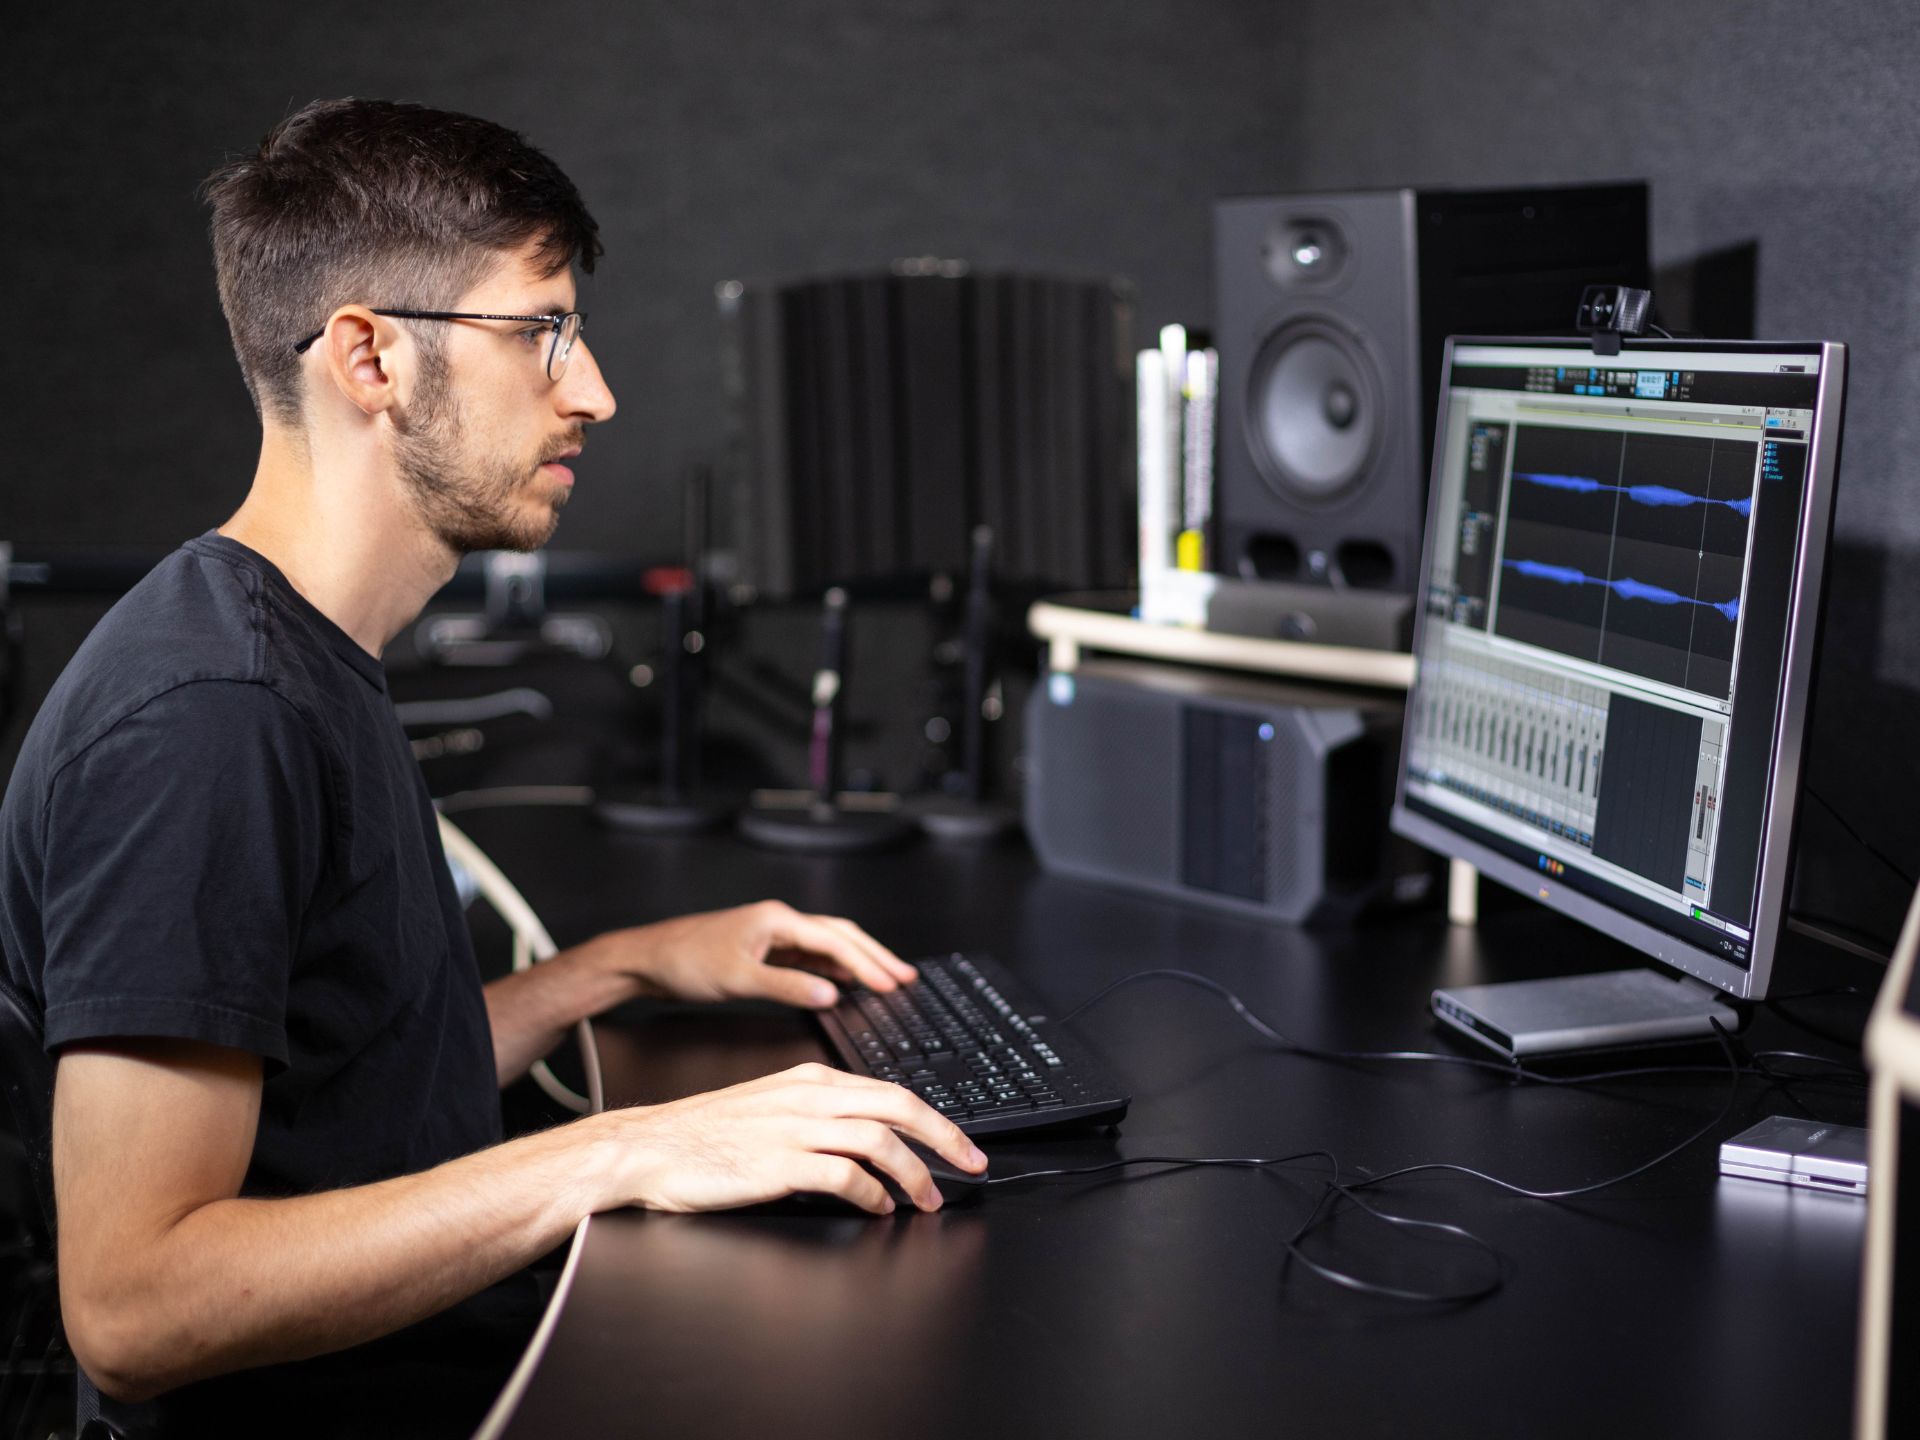 A person sits at a computer using editing software